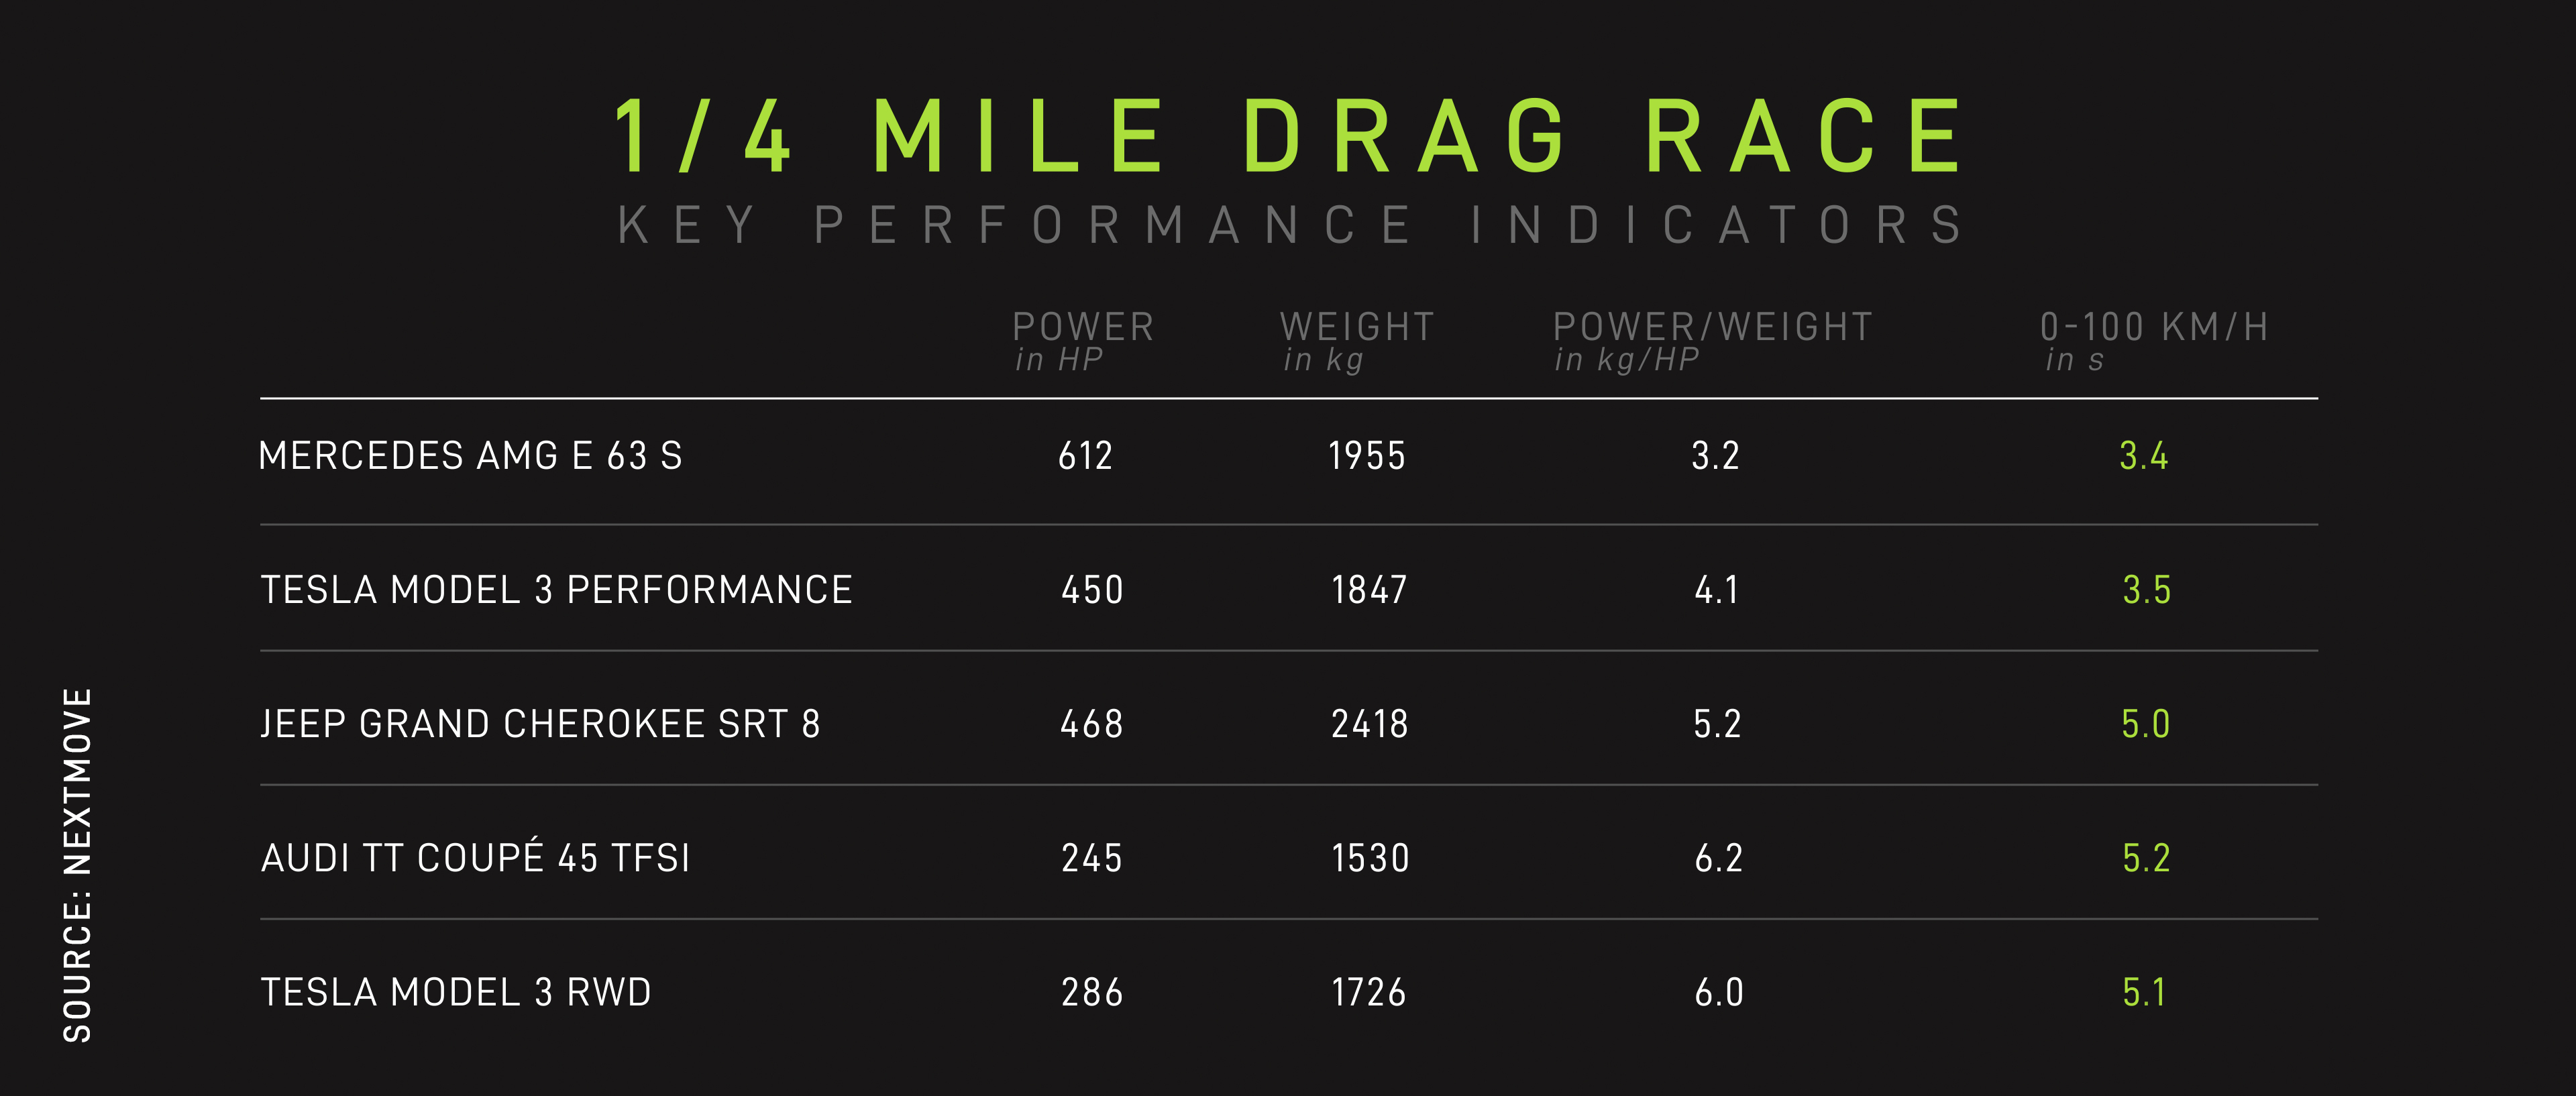 Drag Race Tesla Model 3 Mercedes AMG E 63 S Key Performance Indicator